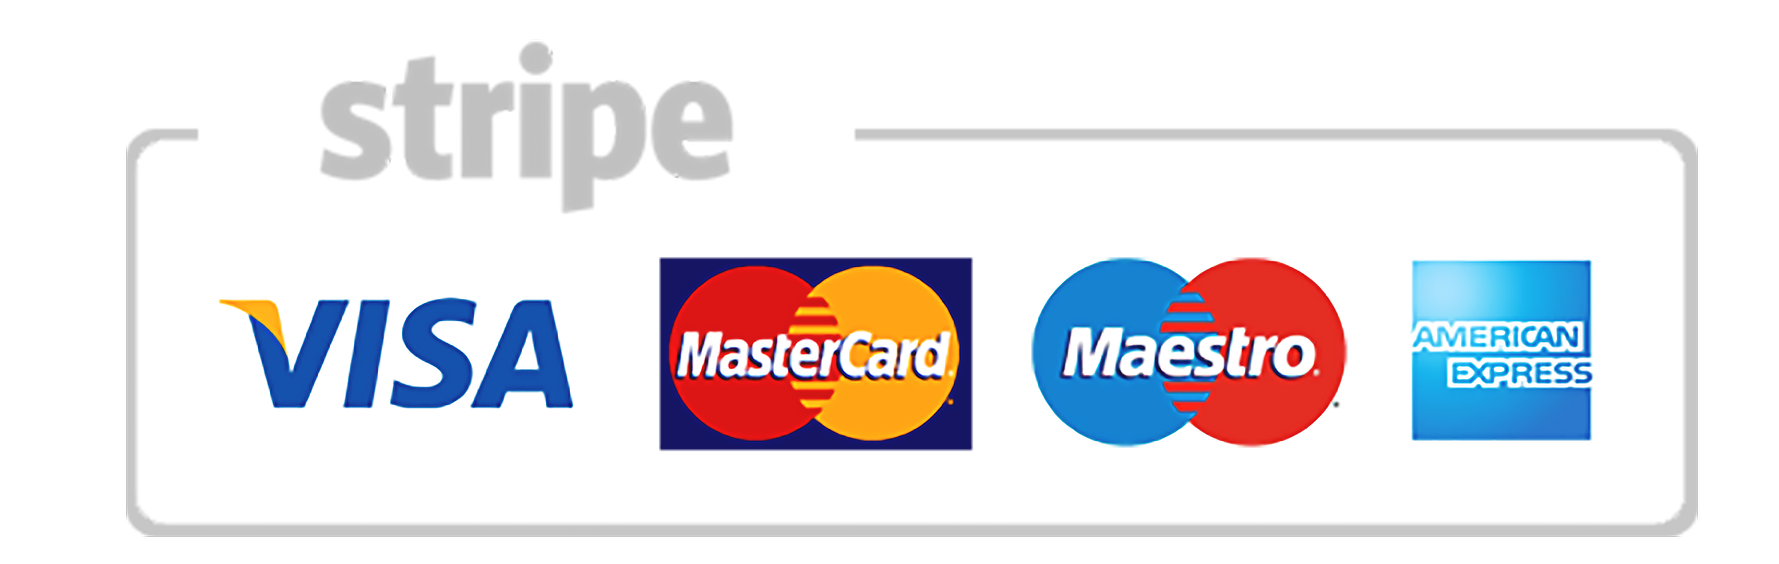 Visa, MasterCard, Maestro, American Express